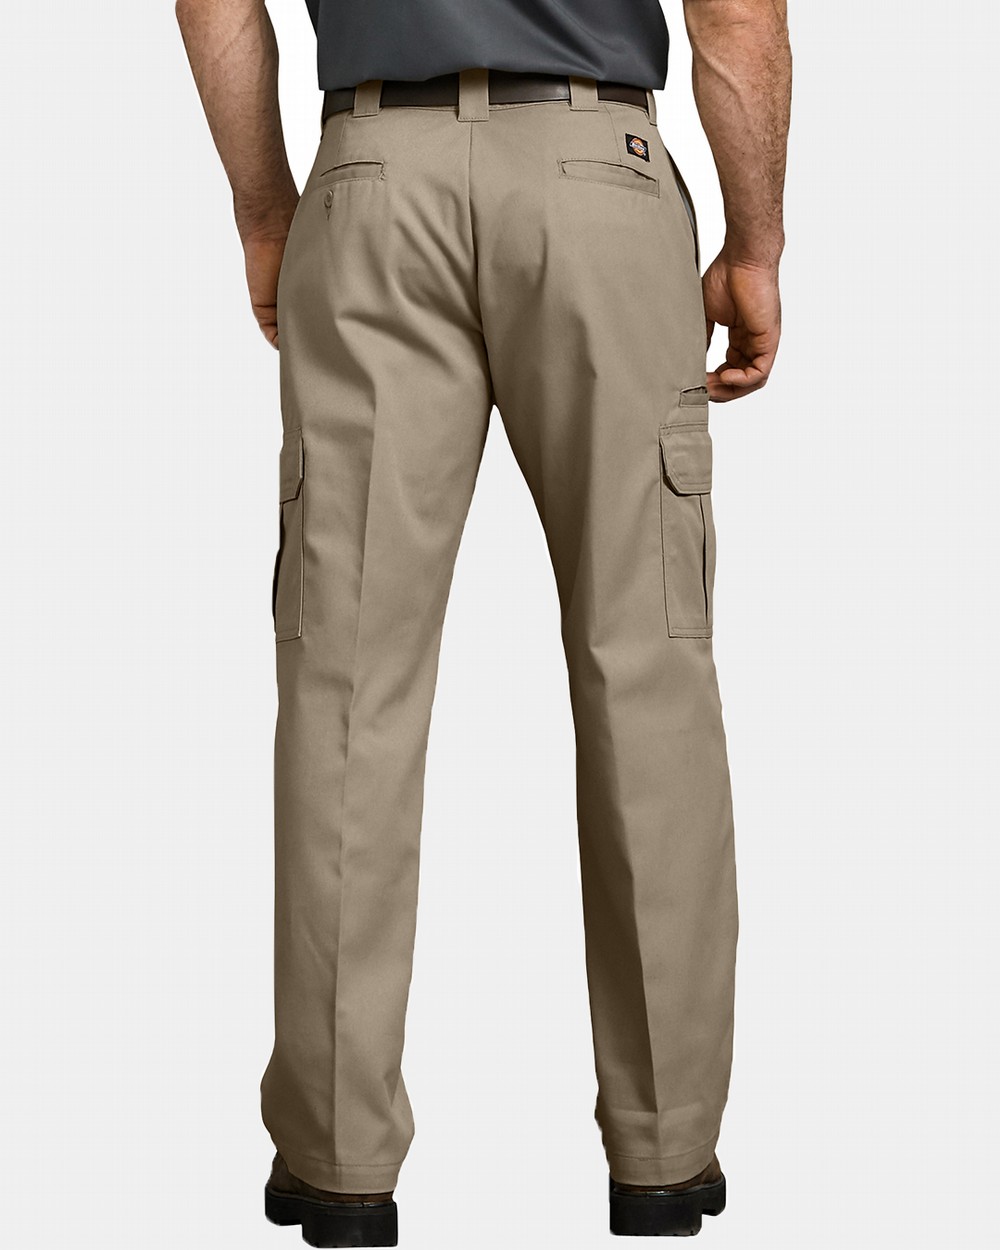 Buy TERSE Cargo Pants Men Loose Pocket Casual Long Trousers Slim Straight  Fit Khaki at Amazonin